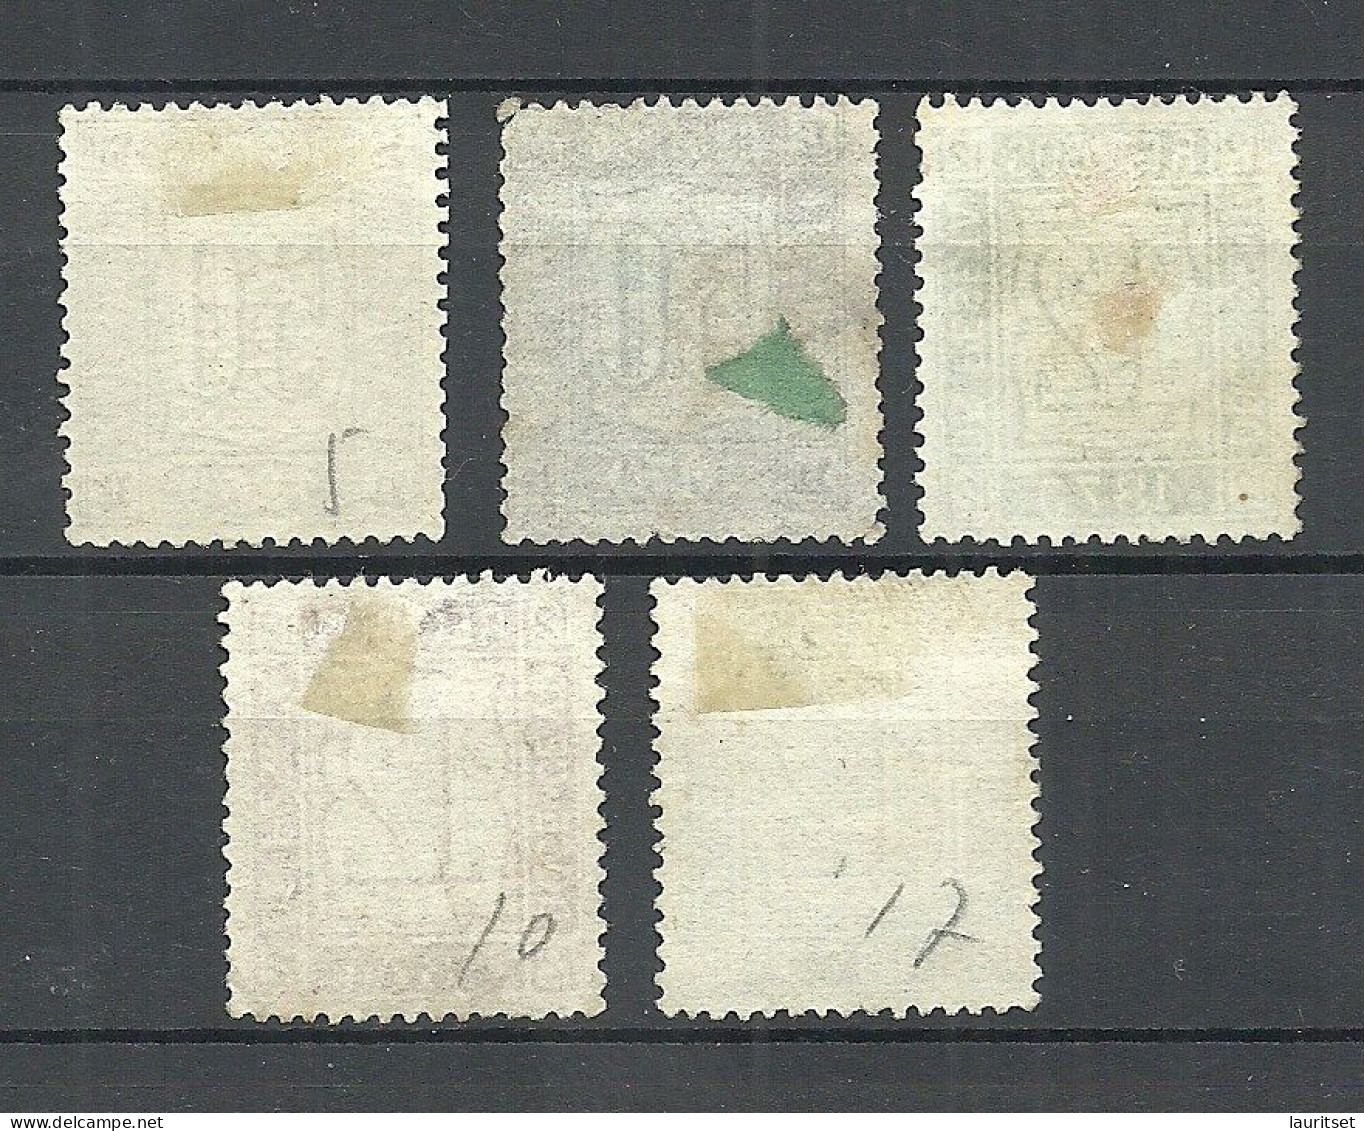 ESPANA Spain 1869 - 1875 RECIBOS Tax Impuesto Revenue Taxe, Unused */(*) - Postage-Revenue Stamps